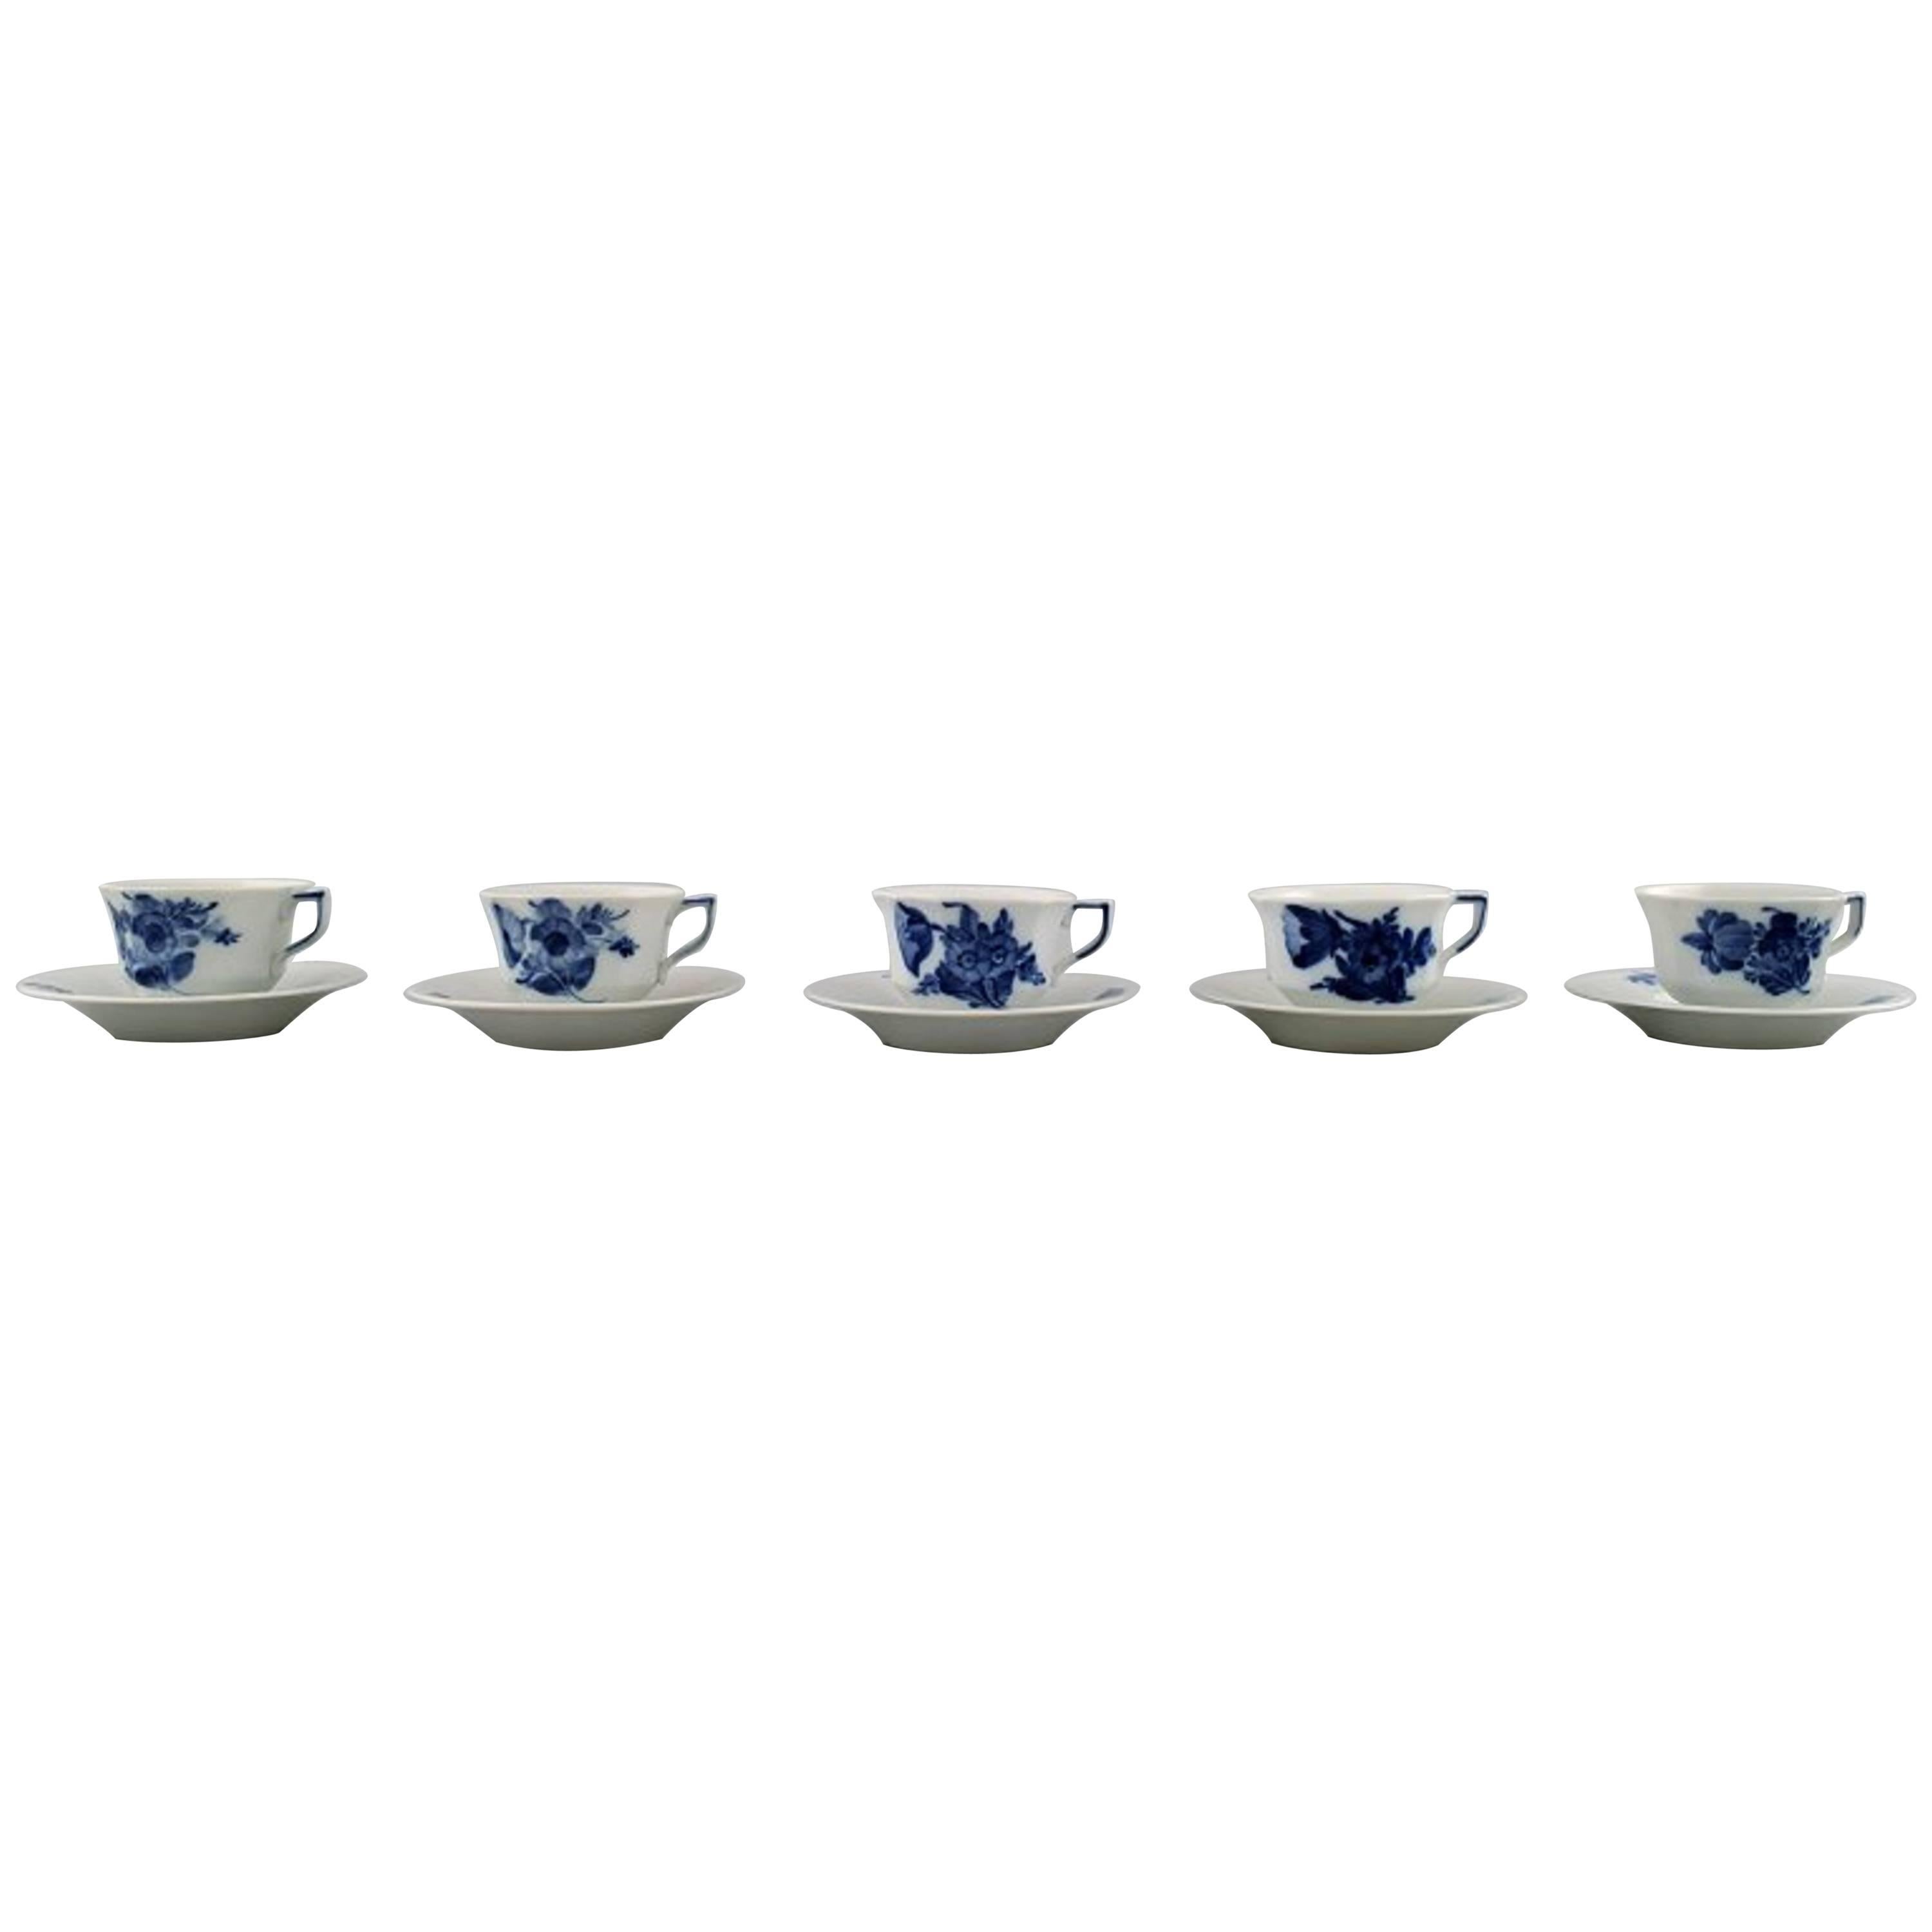 Cinq ensembles de tasses Espresso angulaires à fleurs bleues de Royal Copenhagen